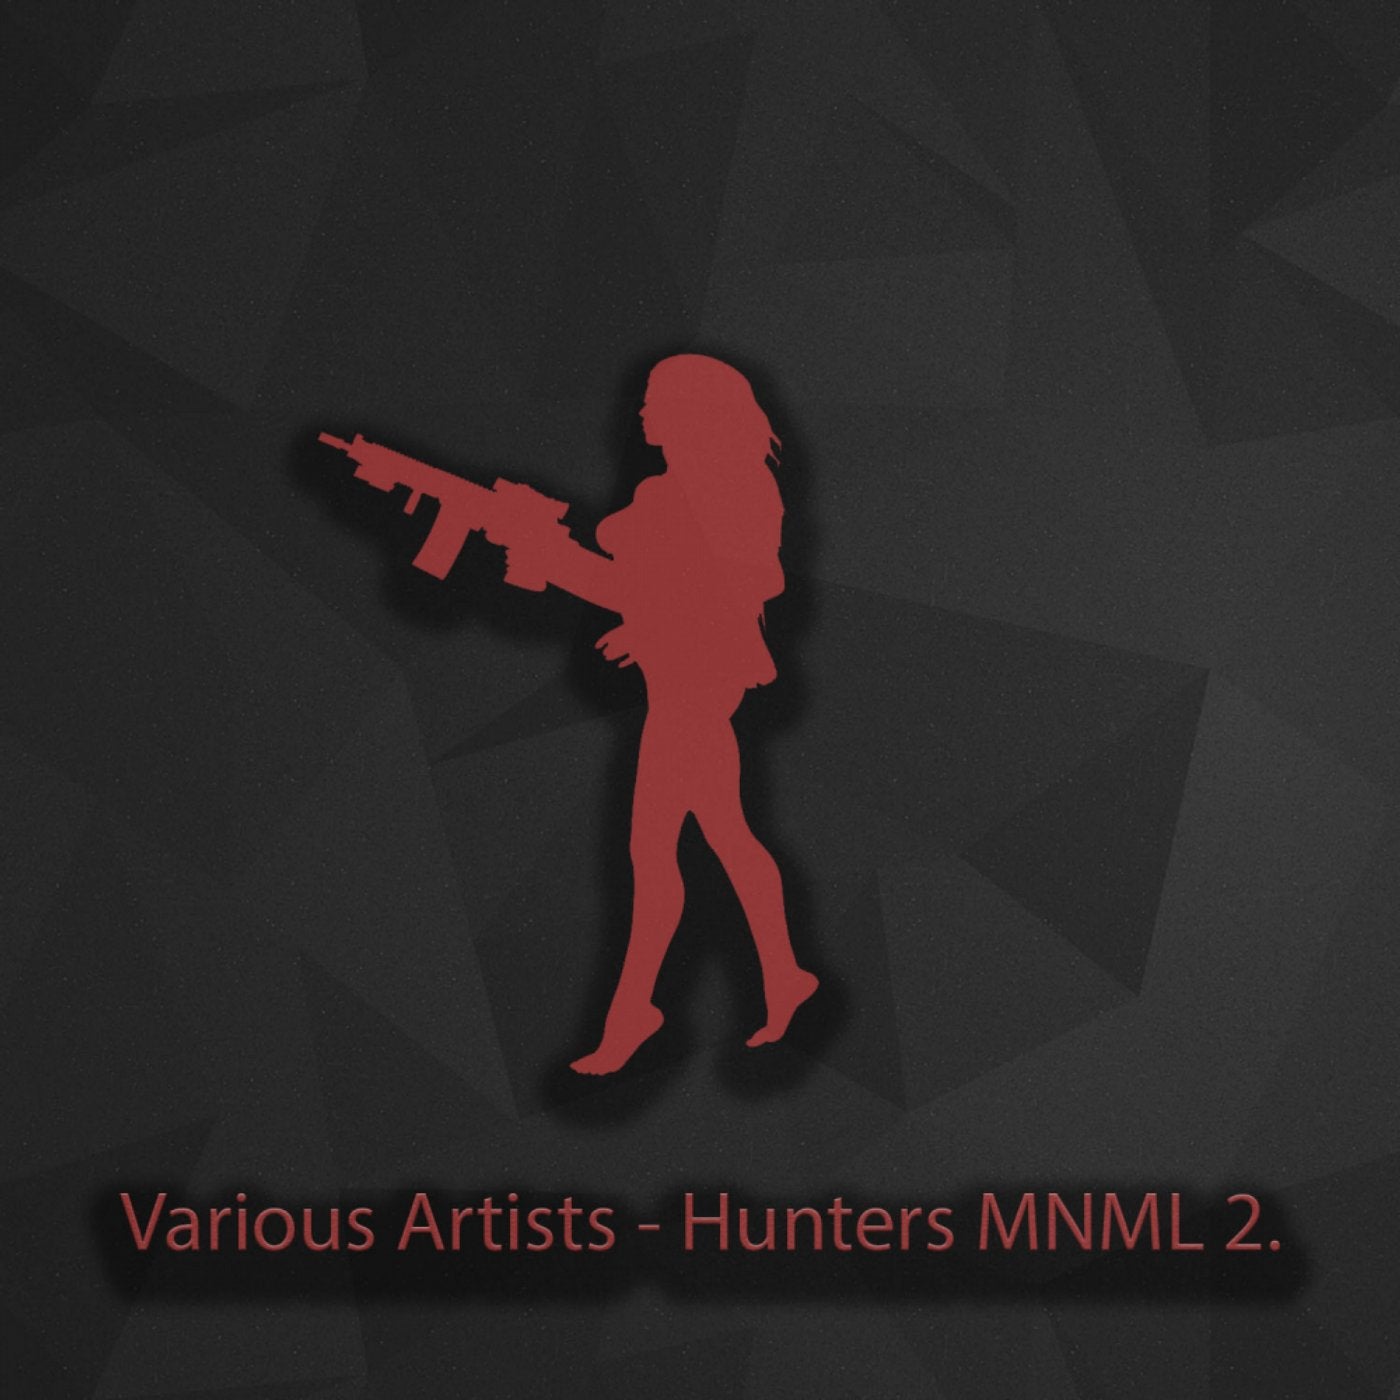 Hunters MNMNL 2.